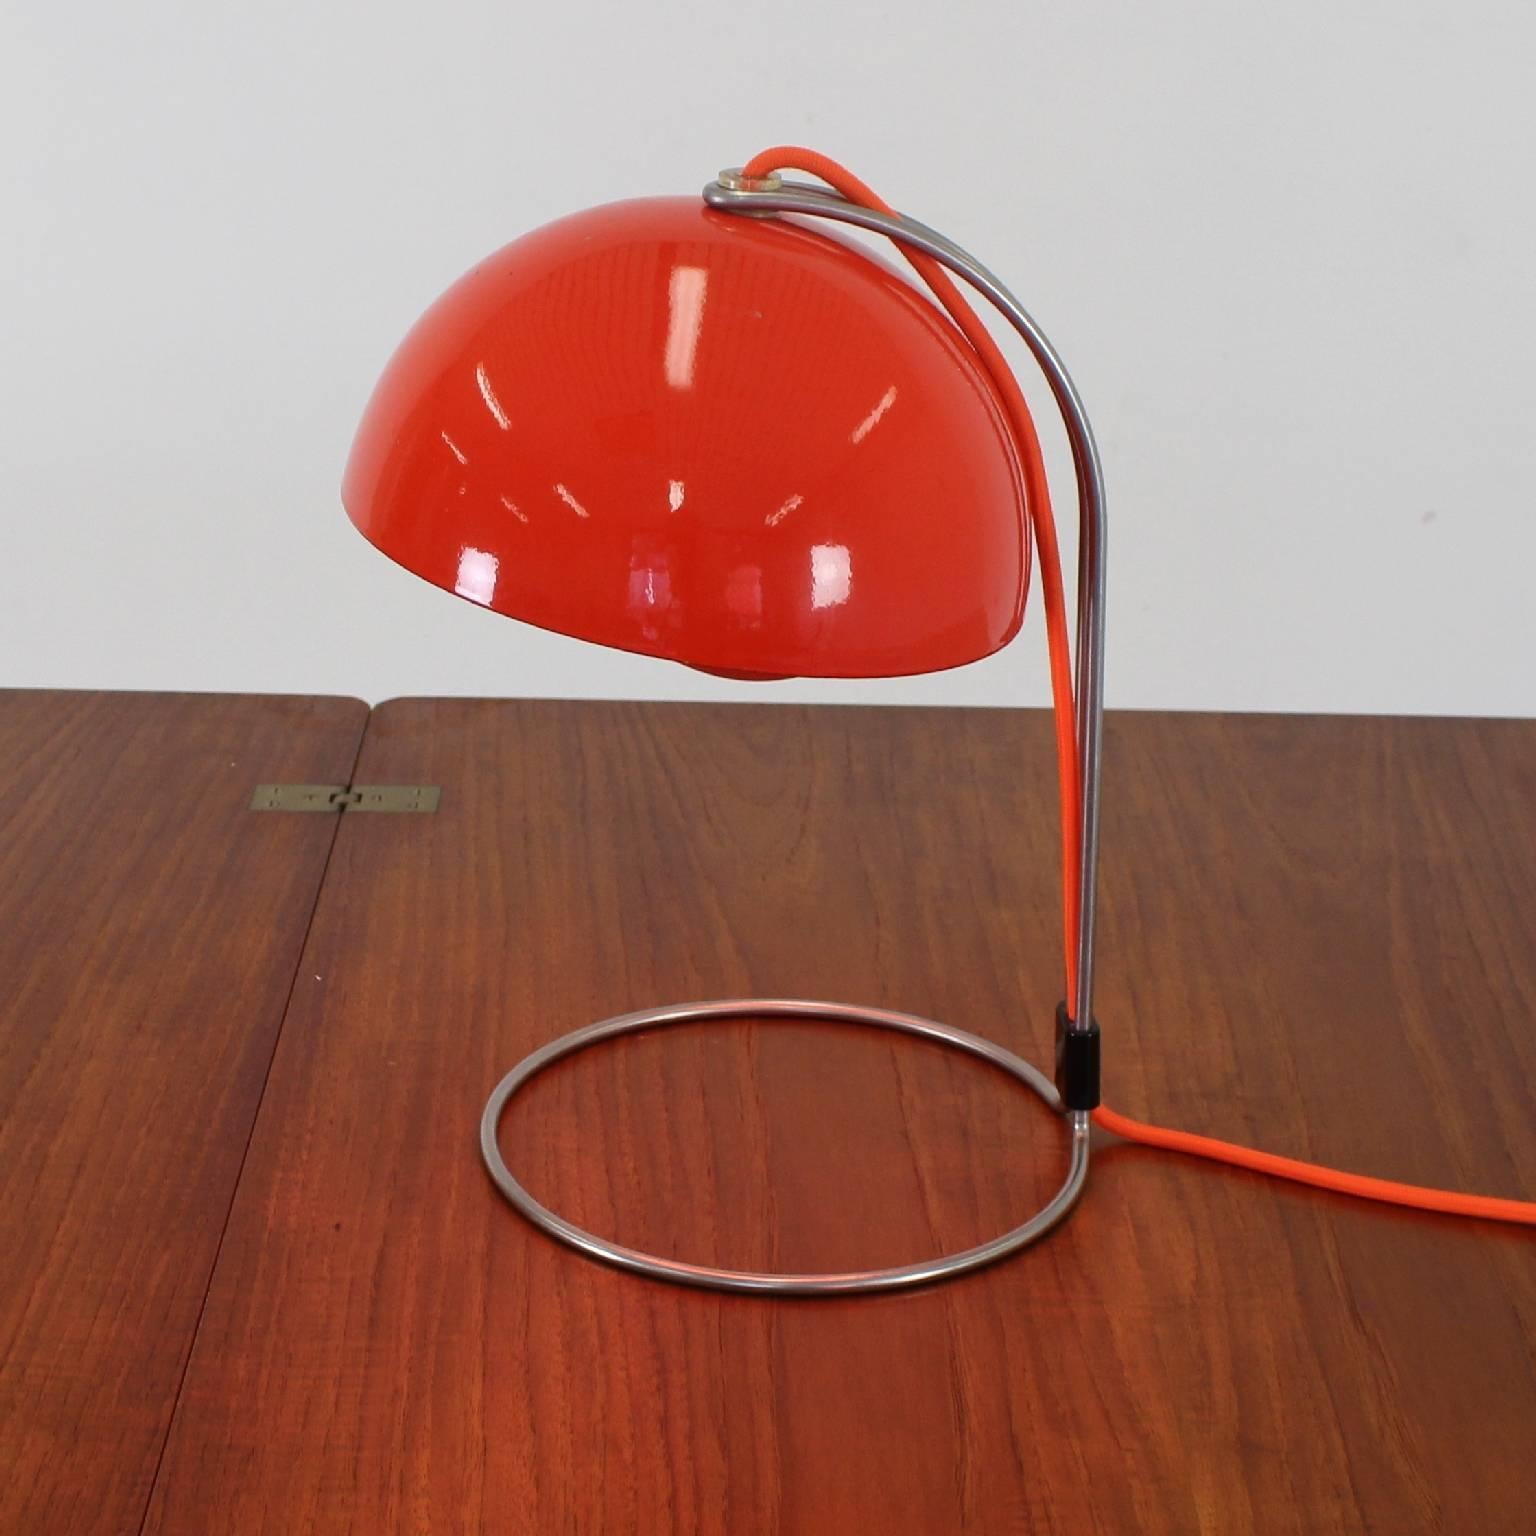 Vintage original flowerpot in orange metal.
Adjustable hood along the chromed metal wire frame.